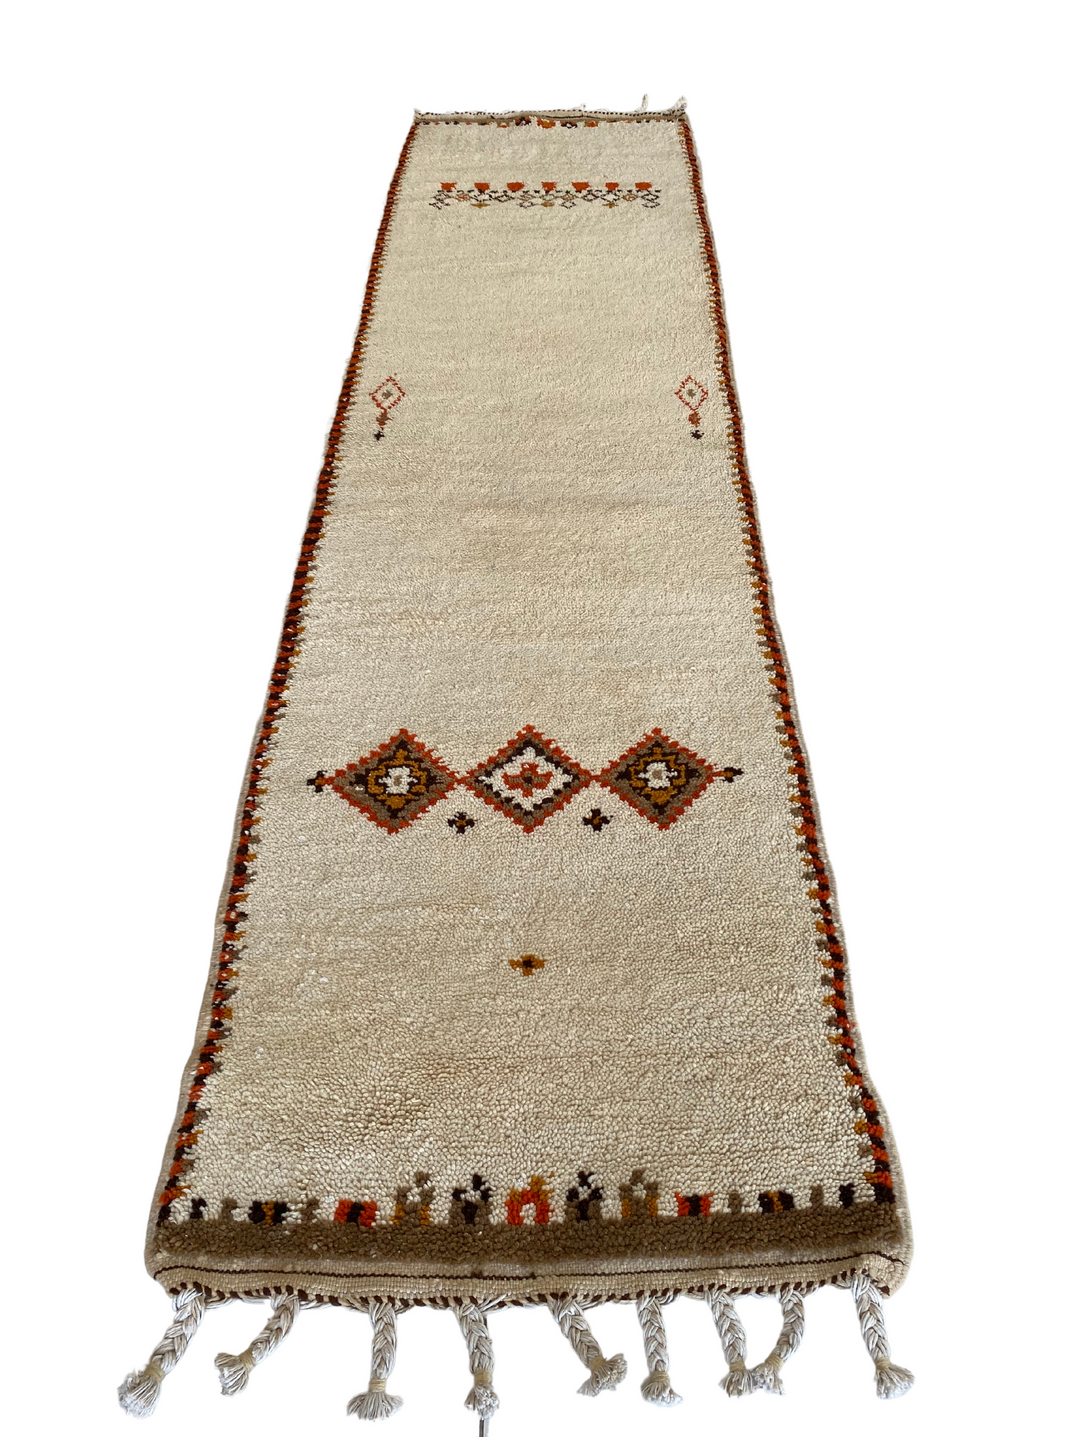 Mane - size: 9.6 x 2.7 - Imam Carpet Co